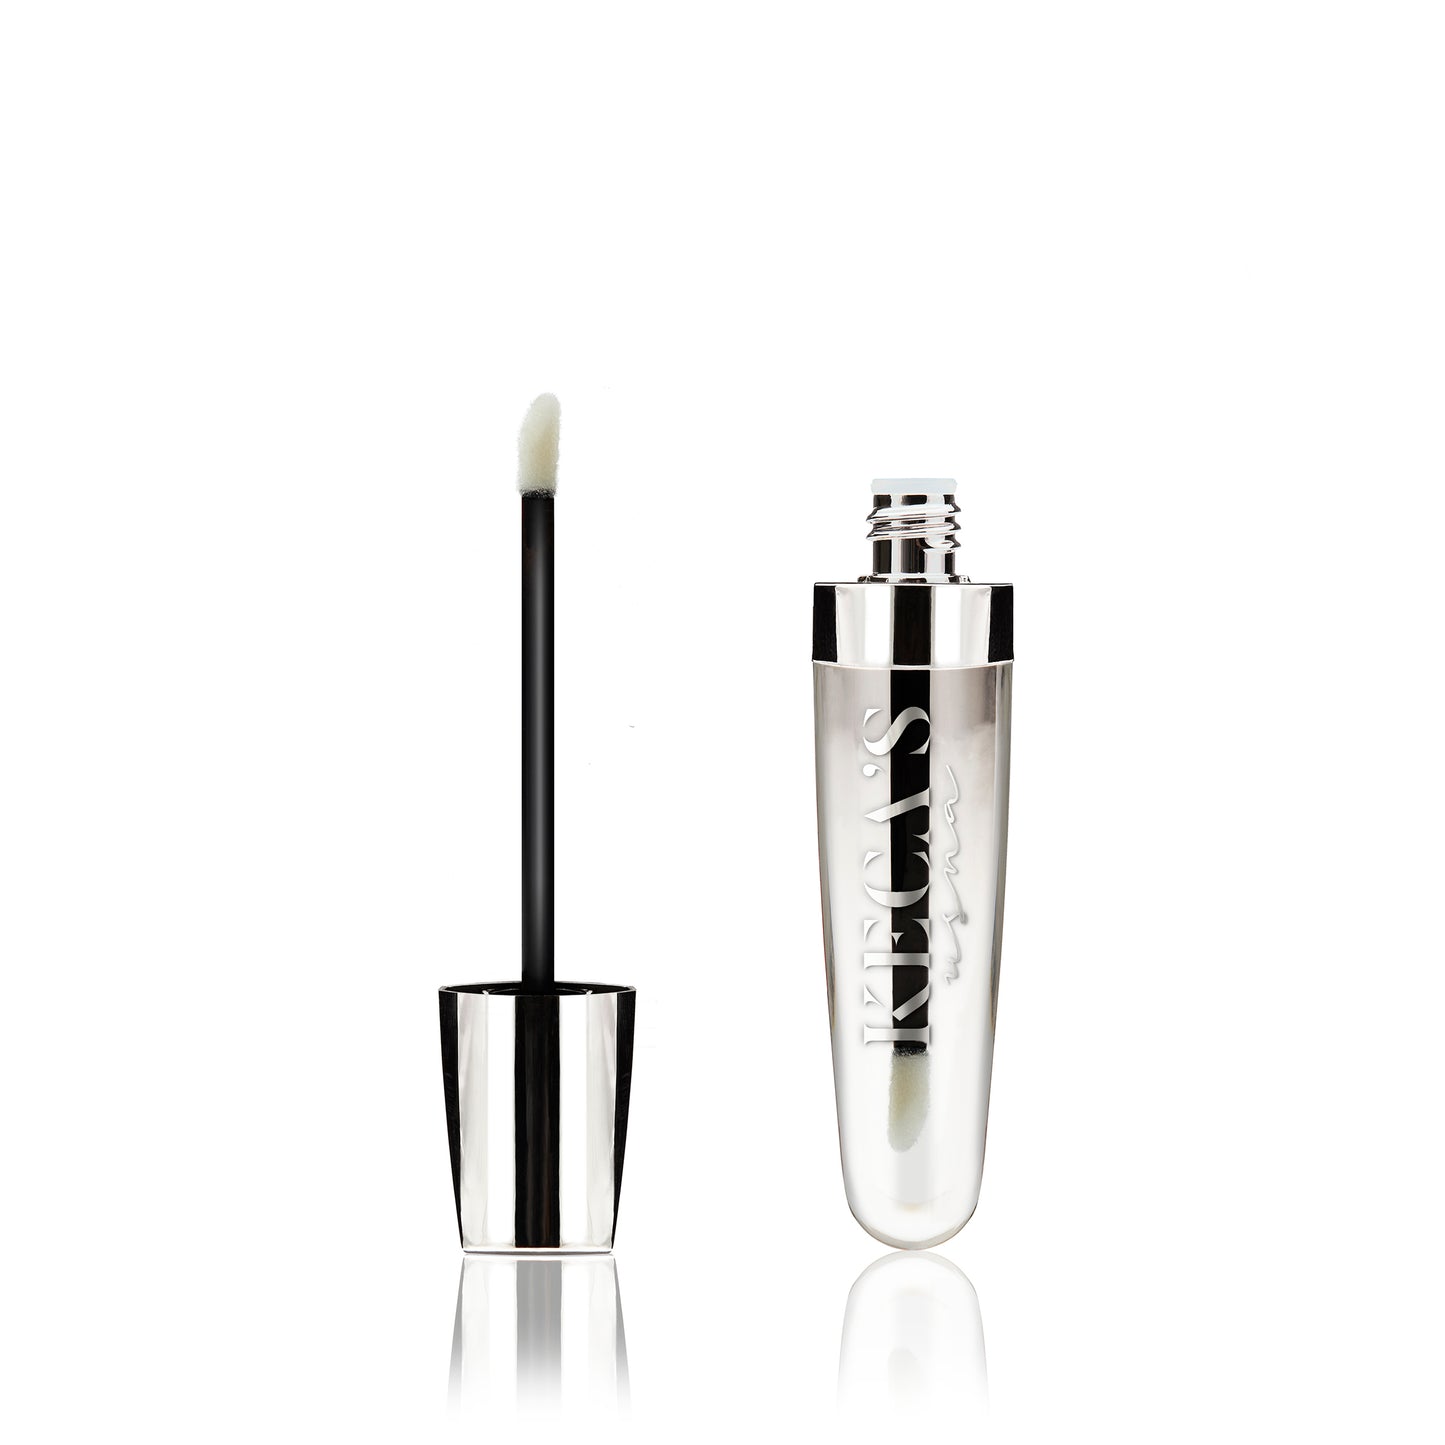 Čisto Gloss Clear Gloss Finish - The Mirror Shine Liquid Lipstick